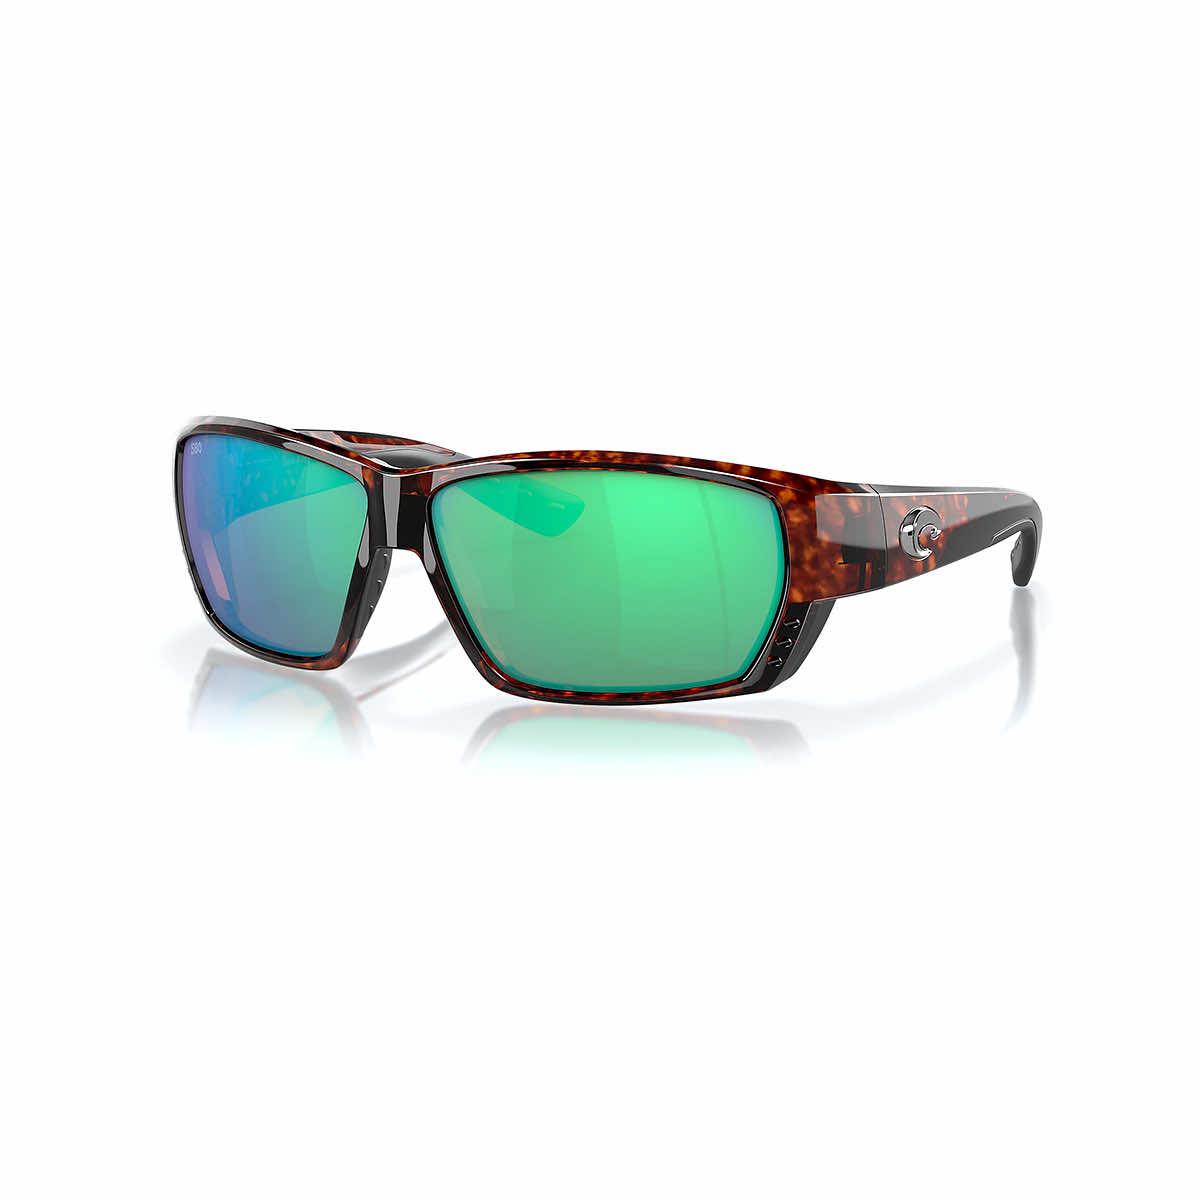  Tuna Alley 580g Sunglasses - Polarized Glass